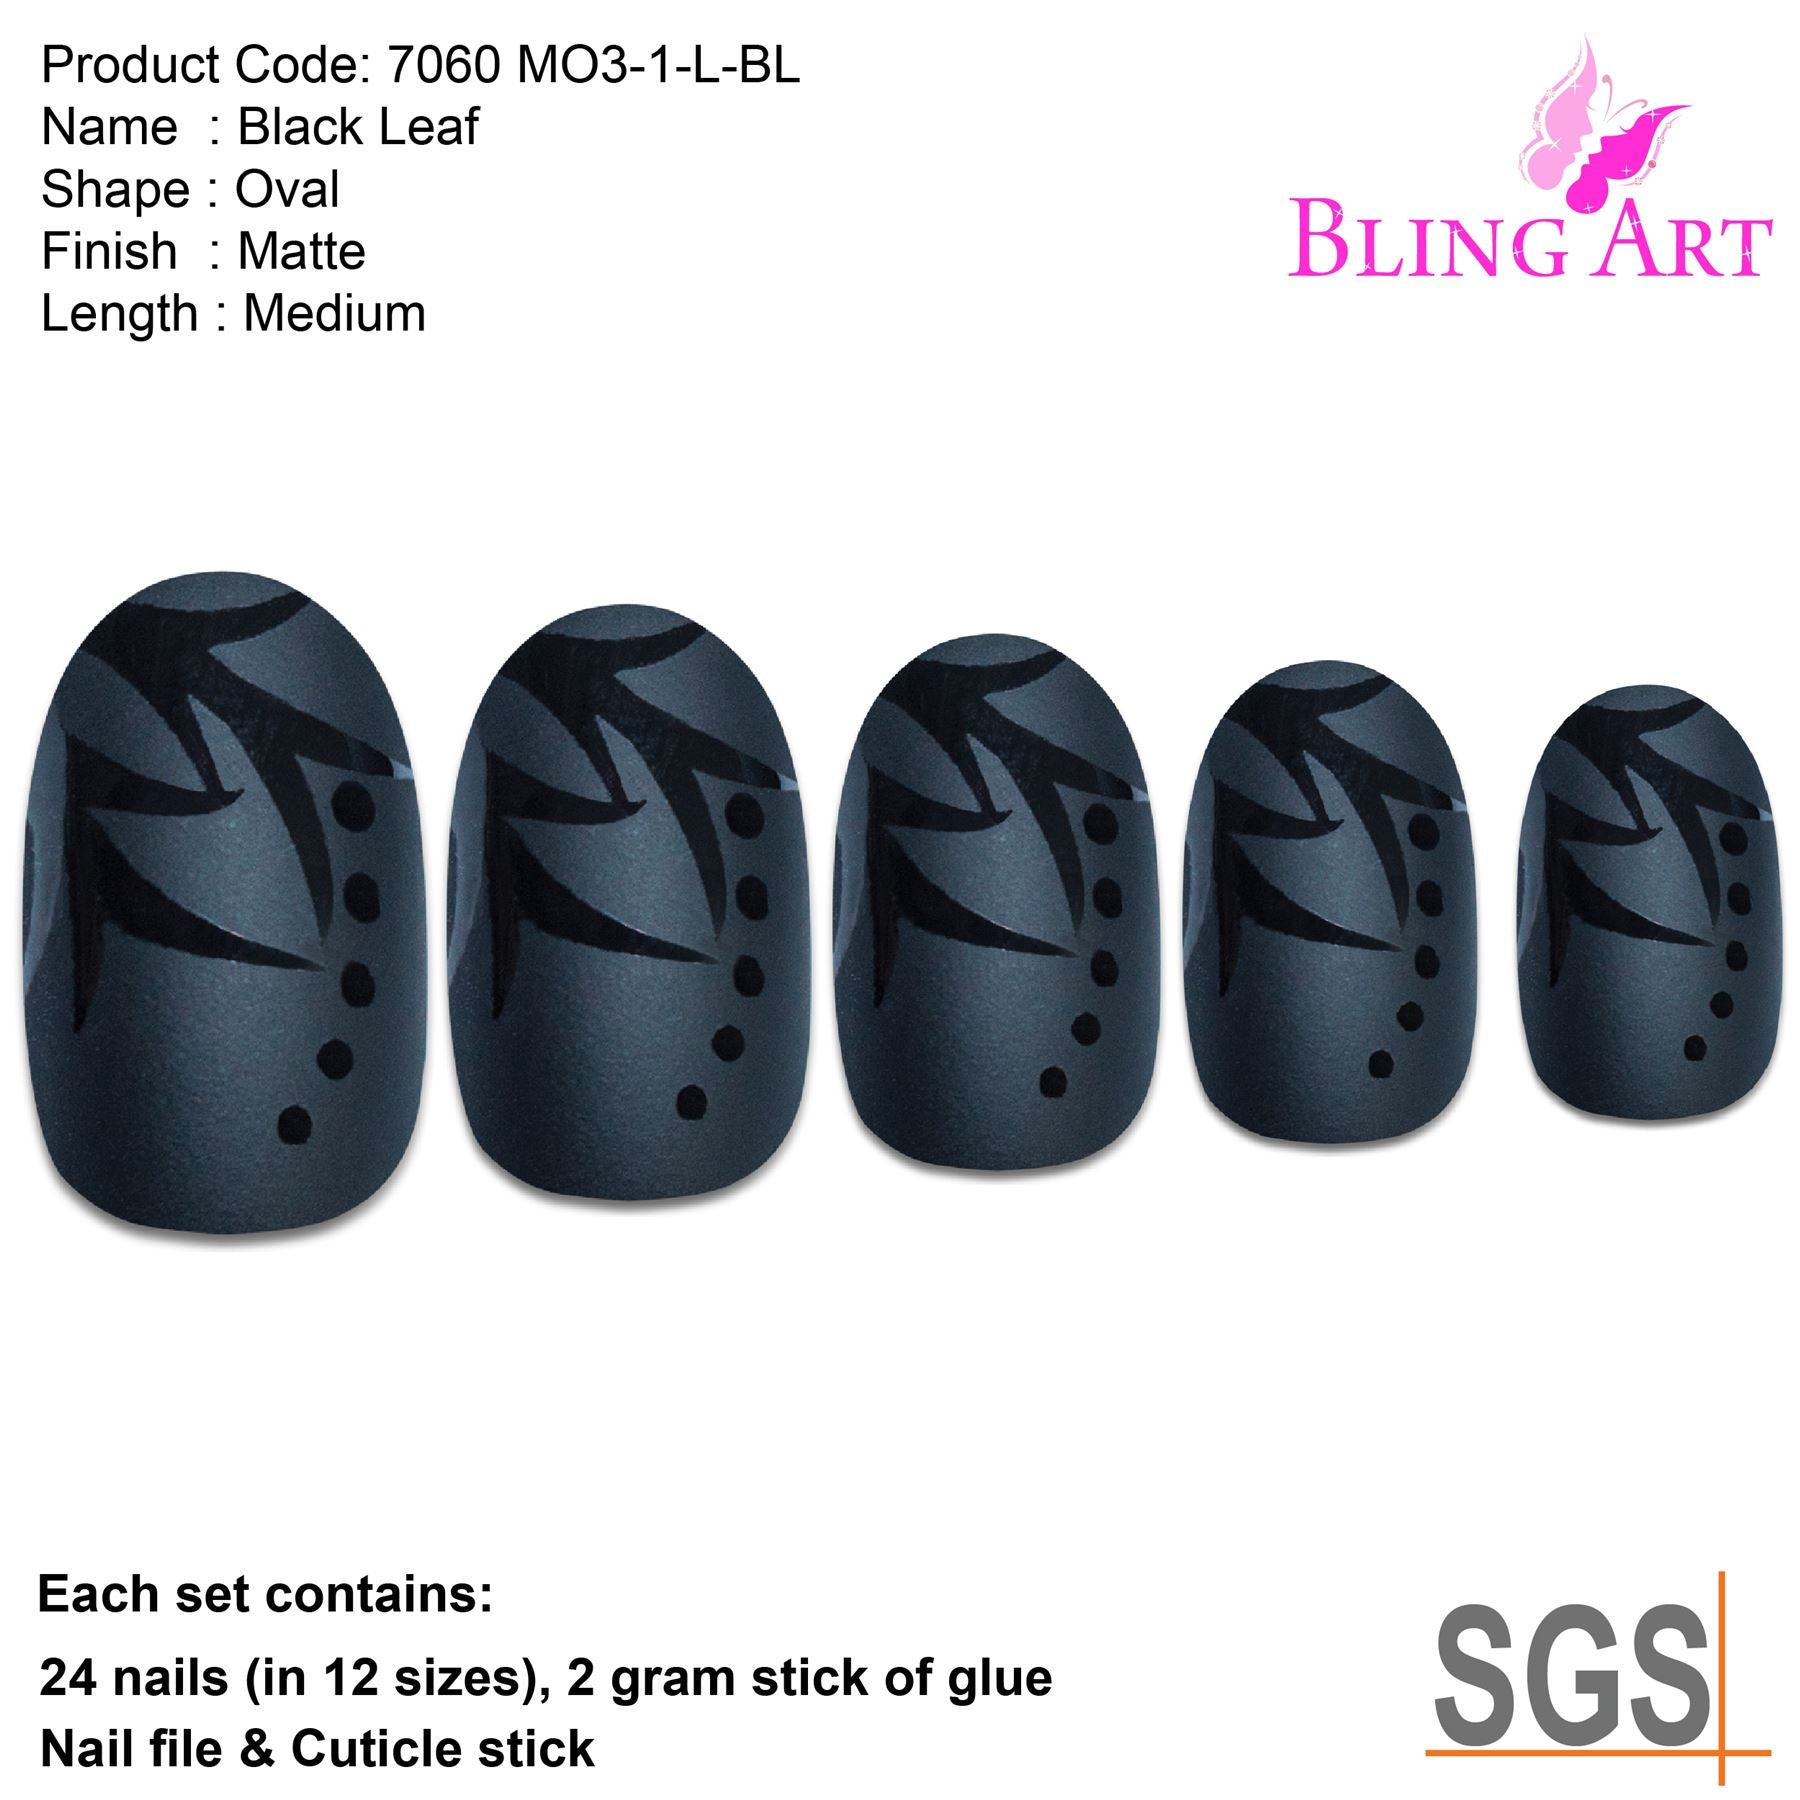 False Nails by Bling Art Black Leaf Matte Oval Medium Fake Acrylic Nail Tips Glue